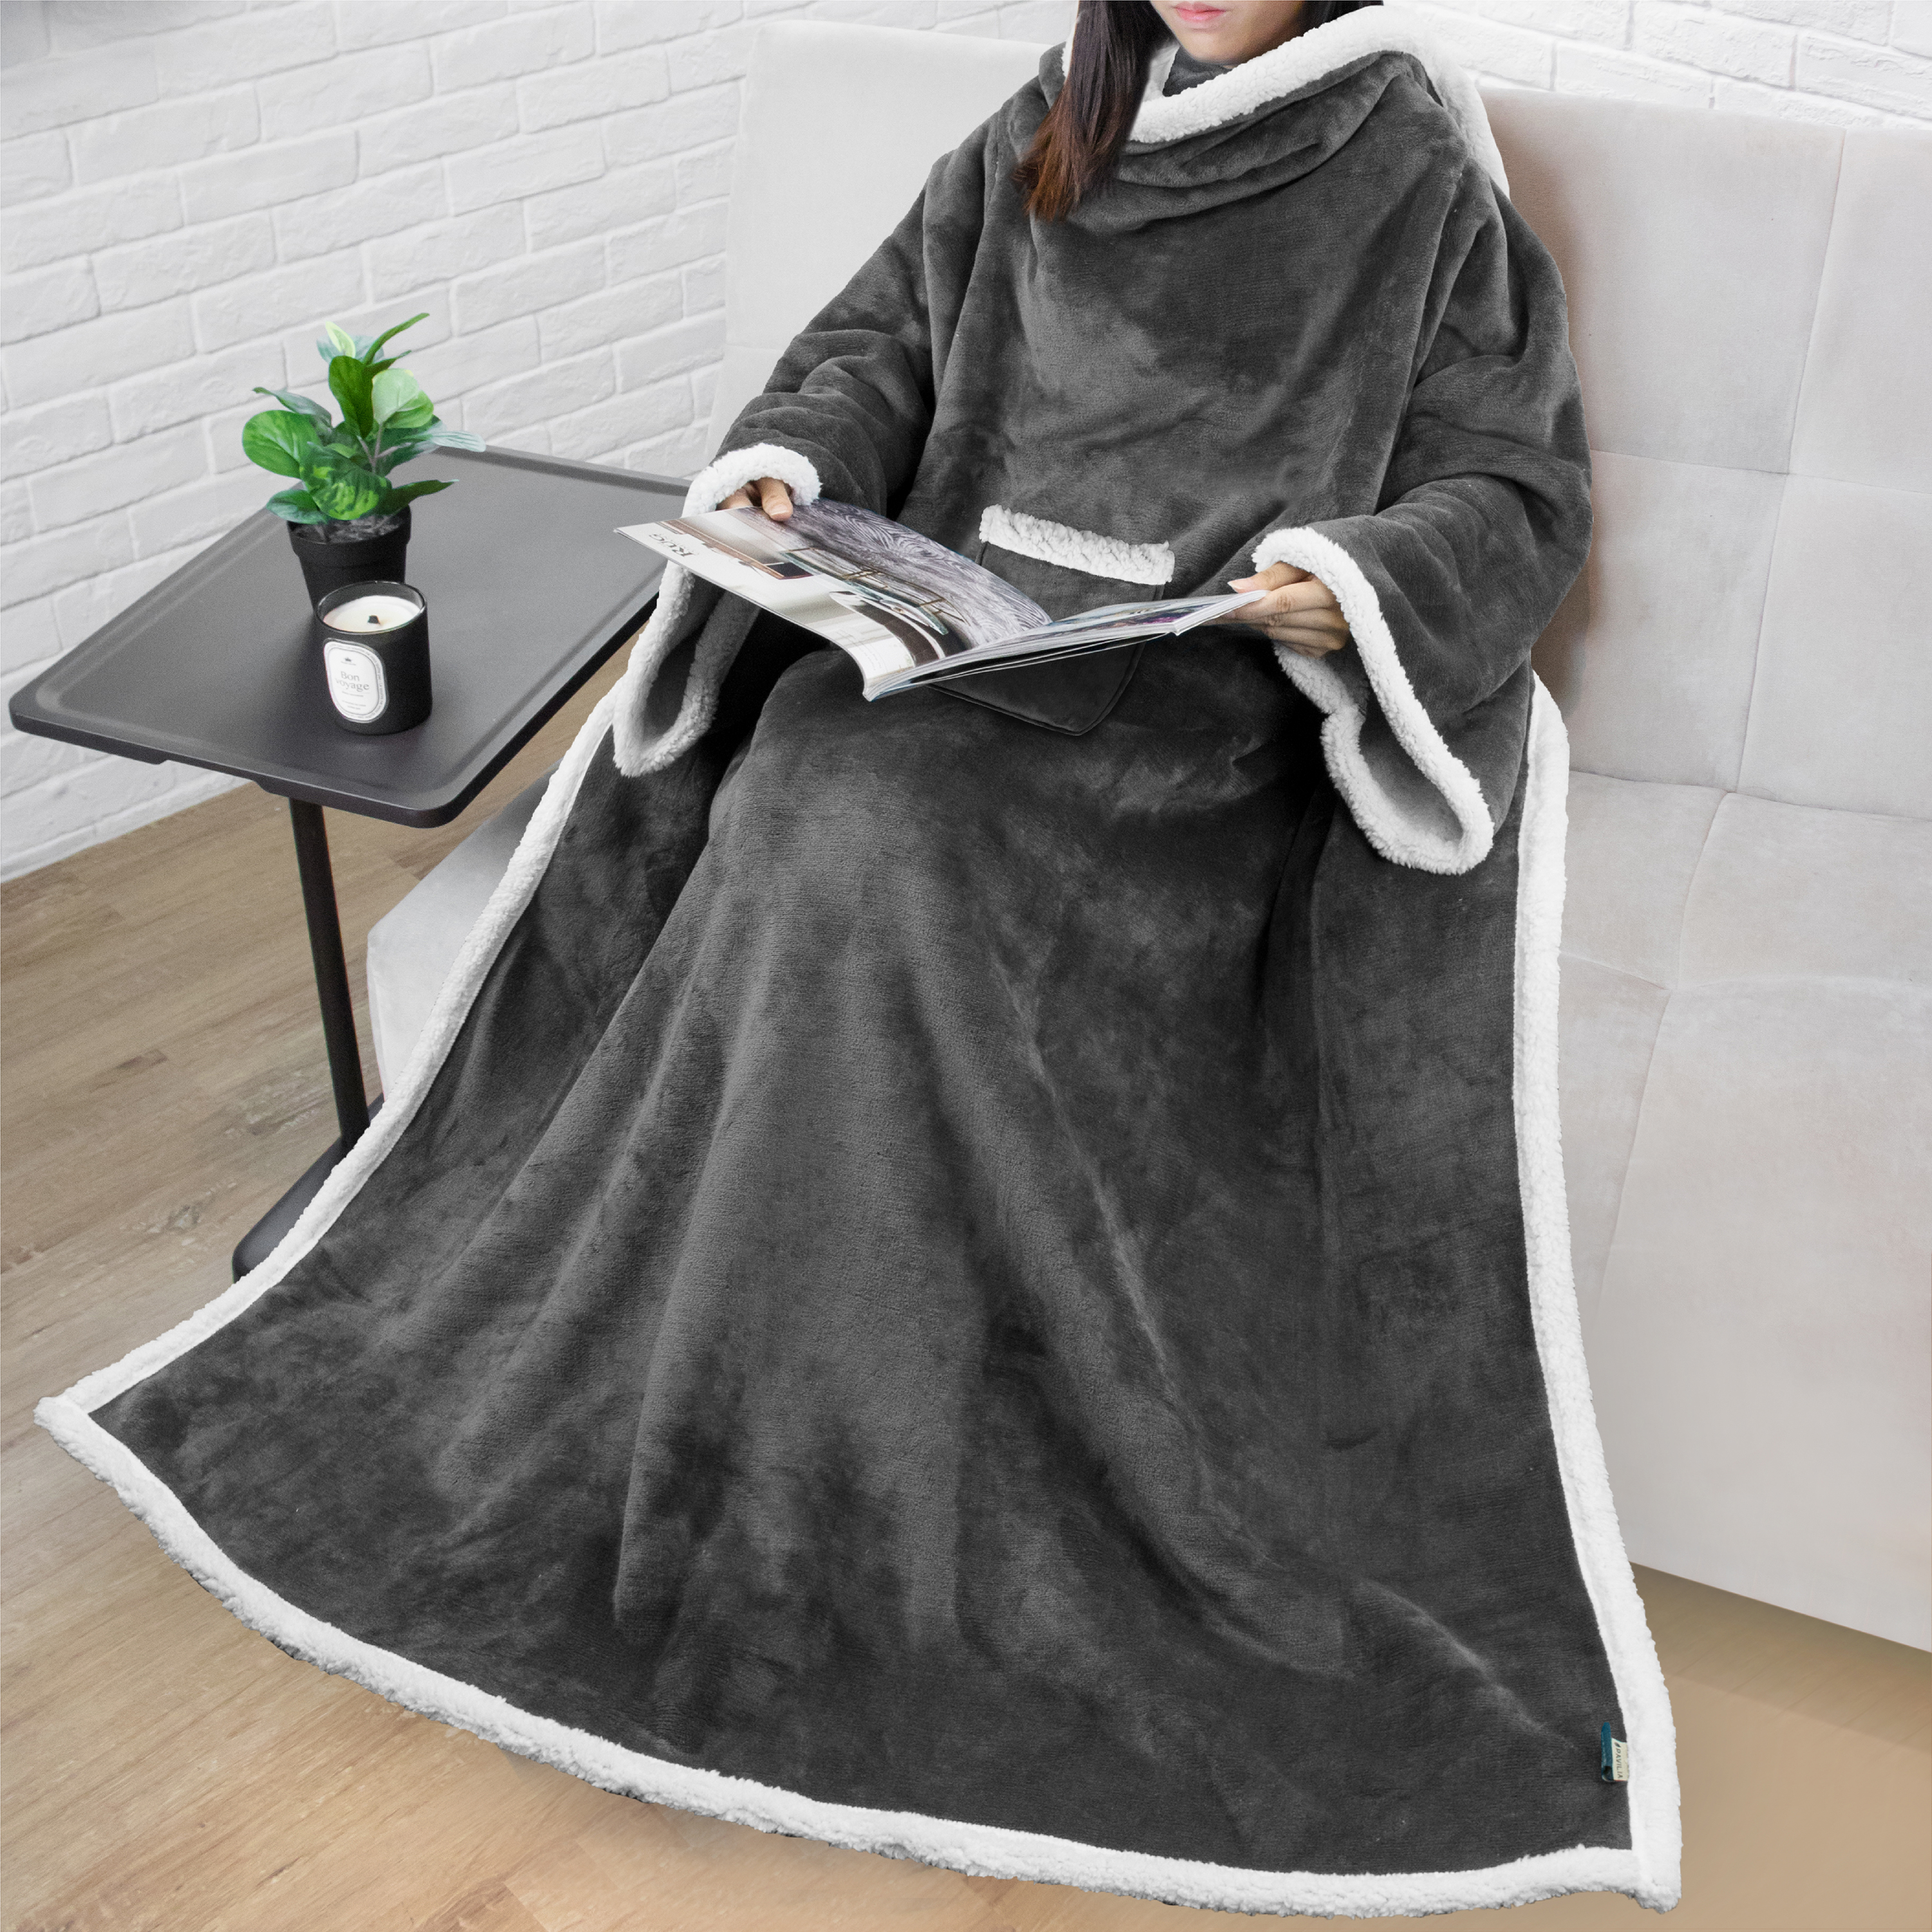 Fleece TV Blanket with Sleeves and Pocket Robe Wearable Blanket Gift Men  Women | eBay